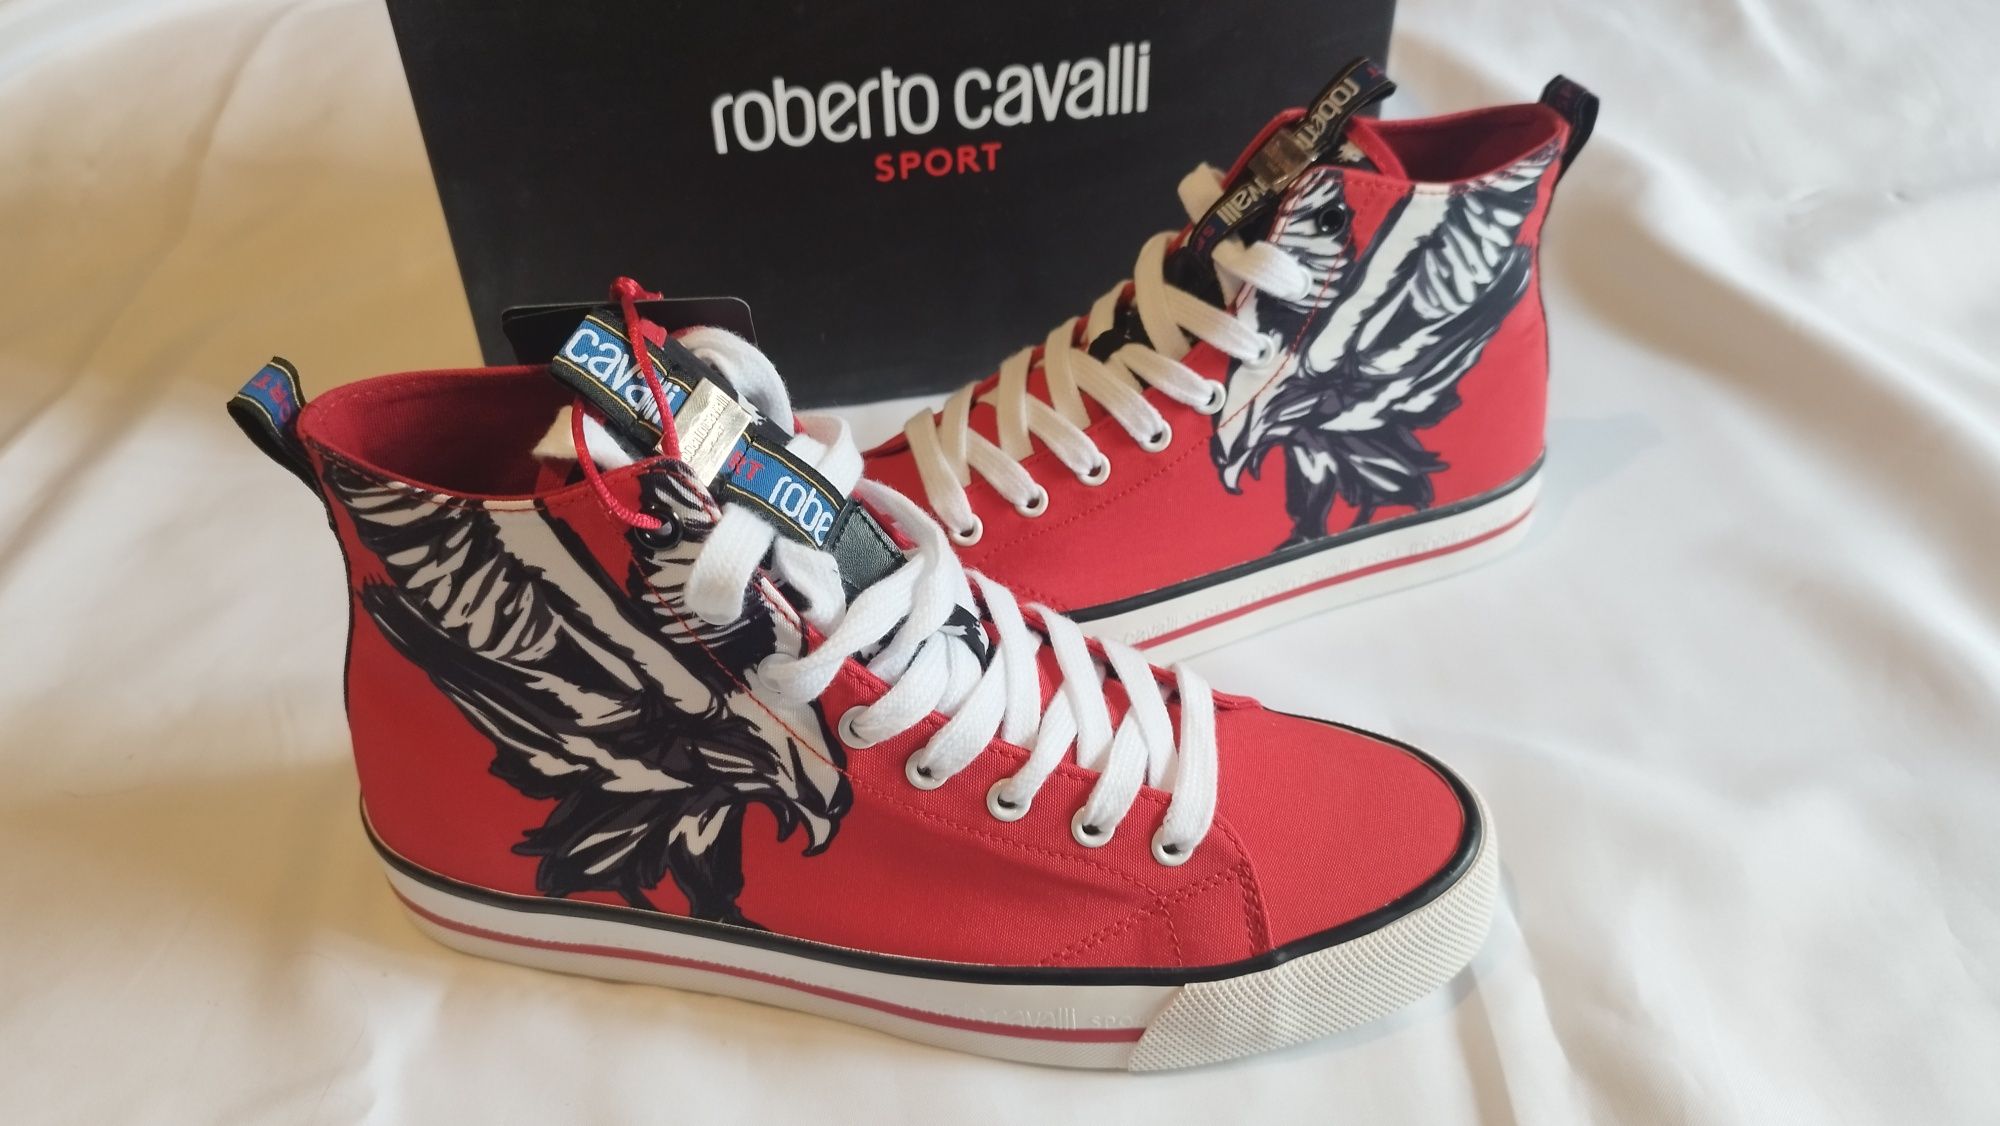 Roberto Cavalli sport